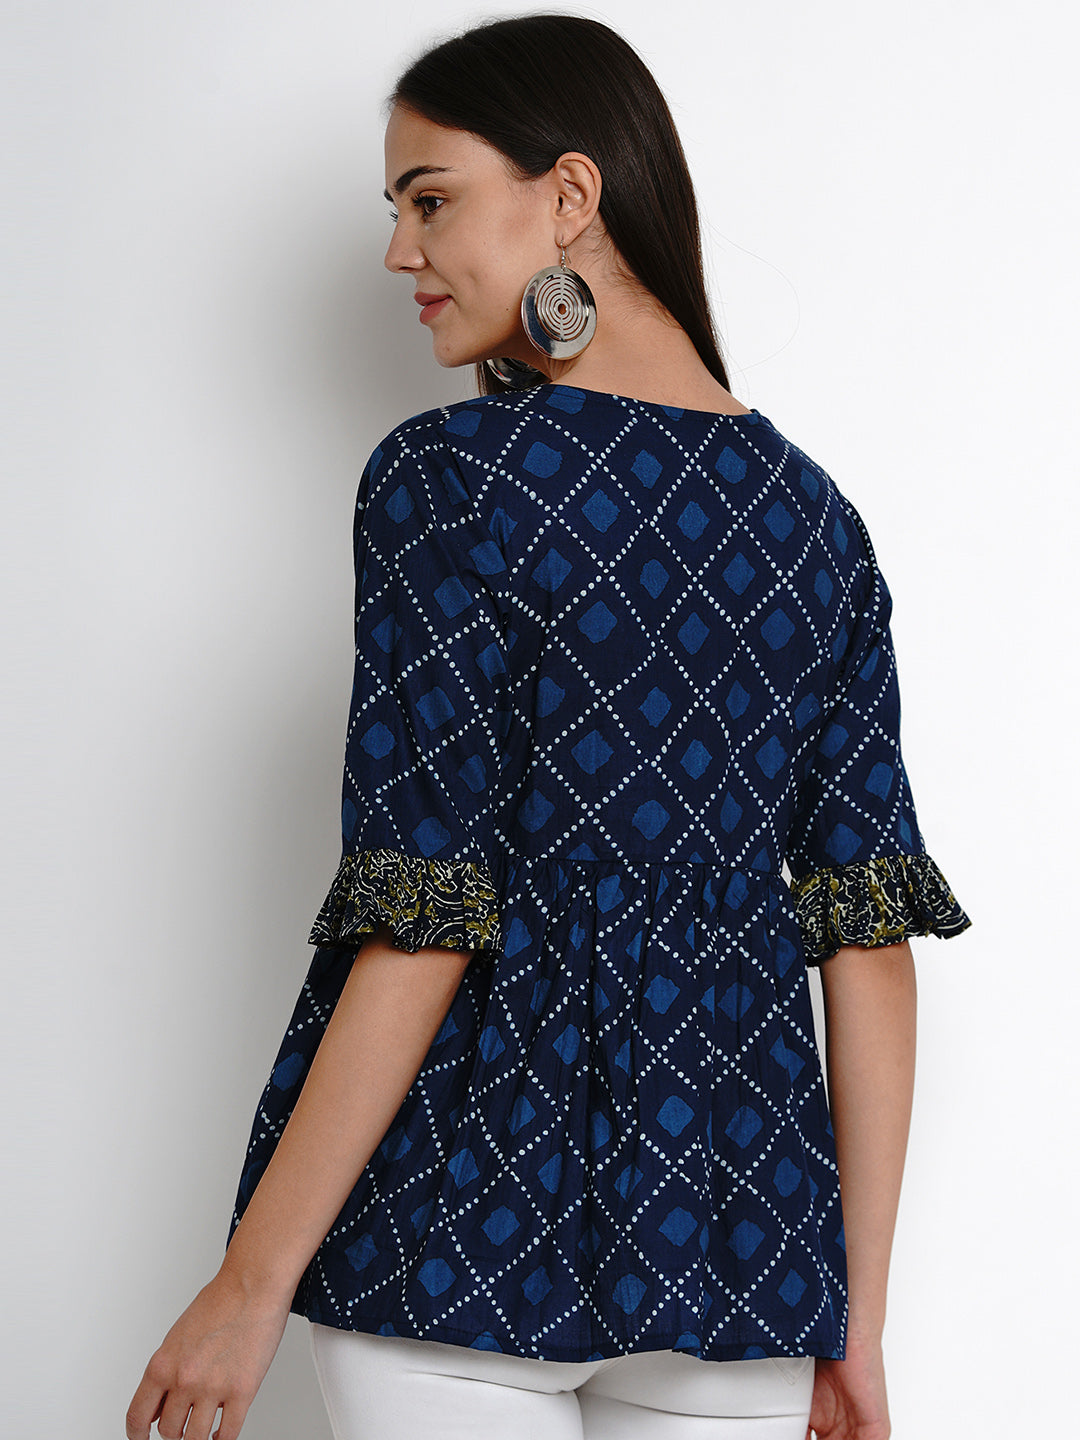 Bhama Couture Indigo Print Shrug Style Top